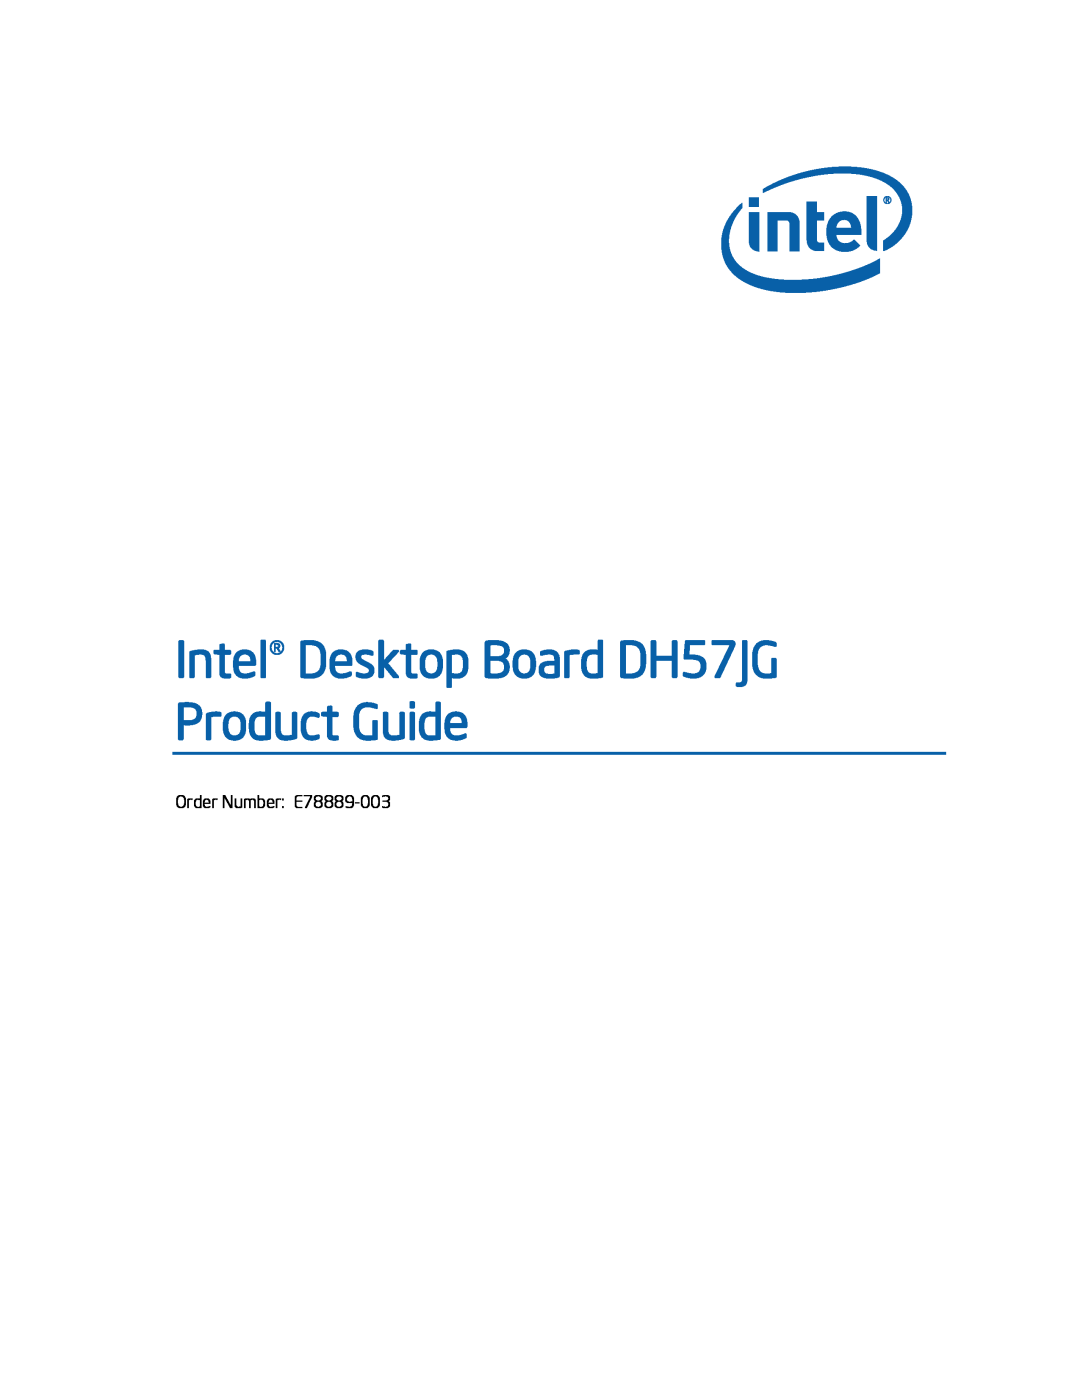 Intel BLKDH57JG manual Intel Desktop Board DH57JG Product Guide, Order Number E78889-003 